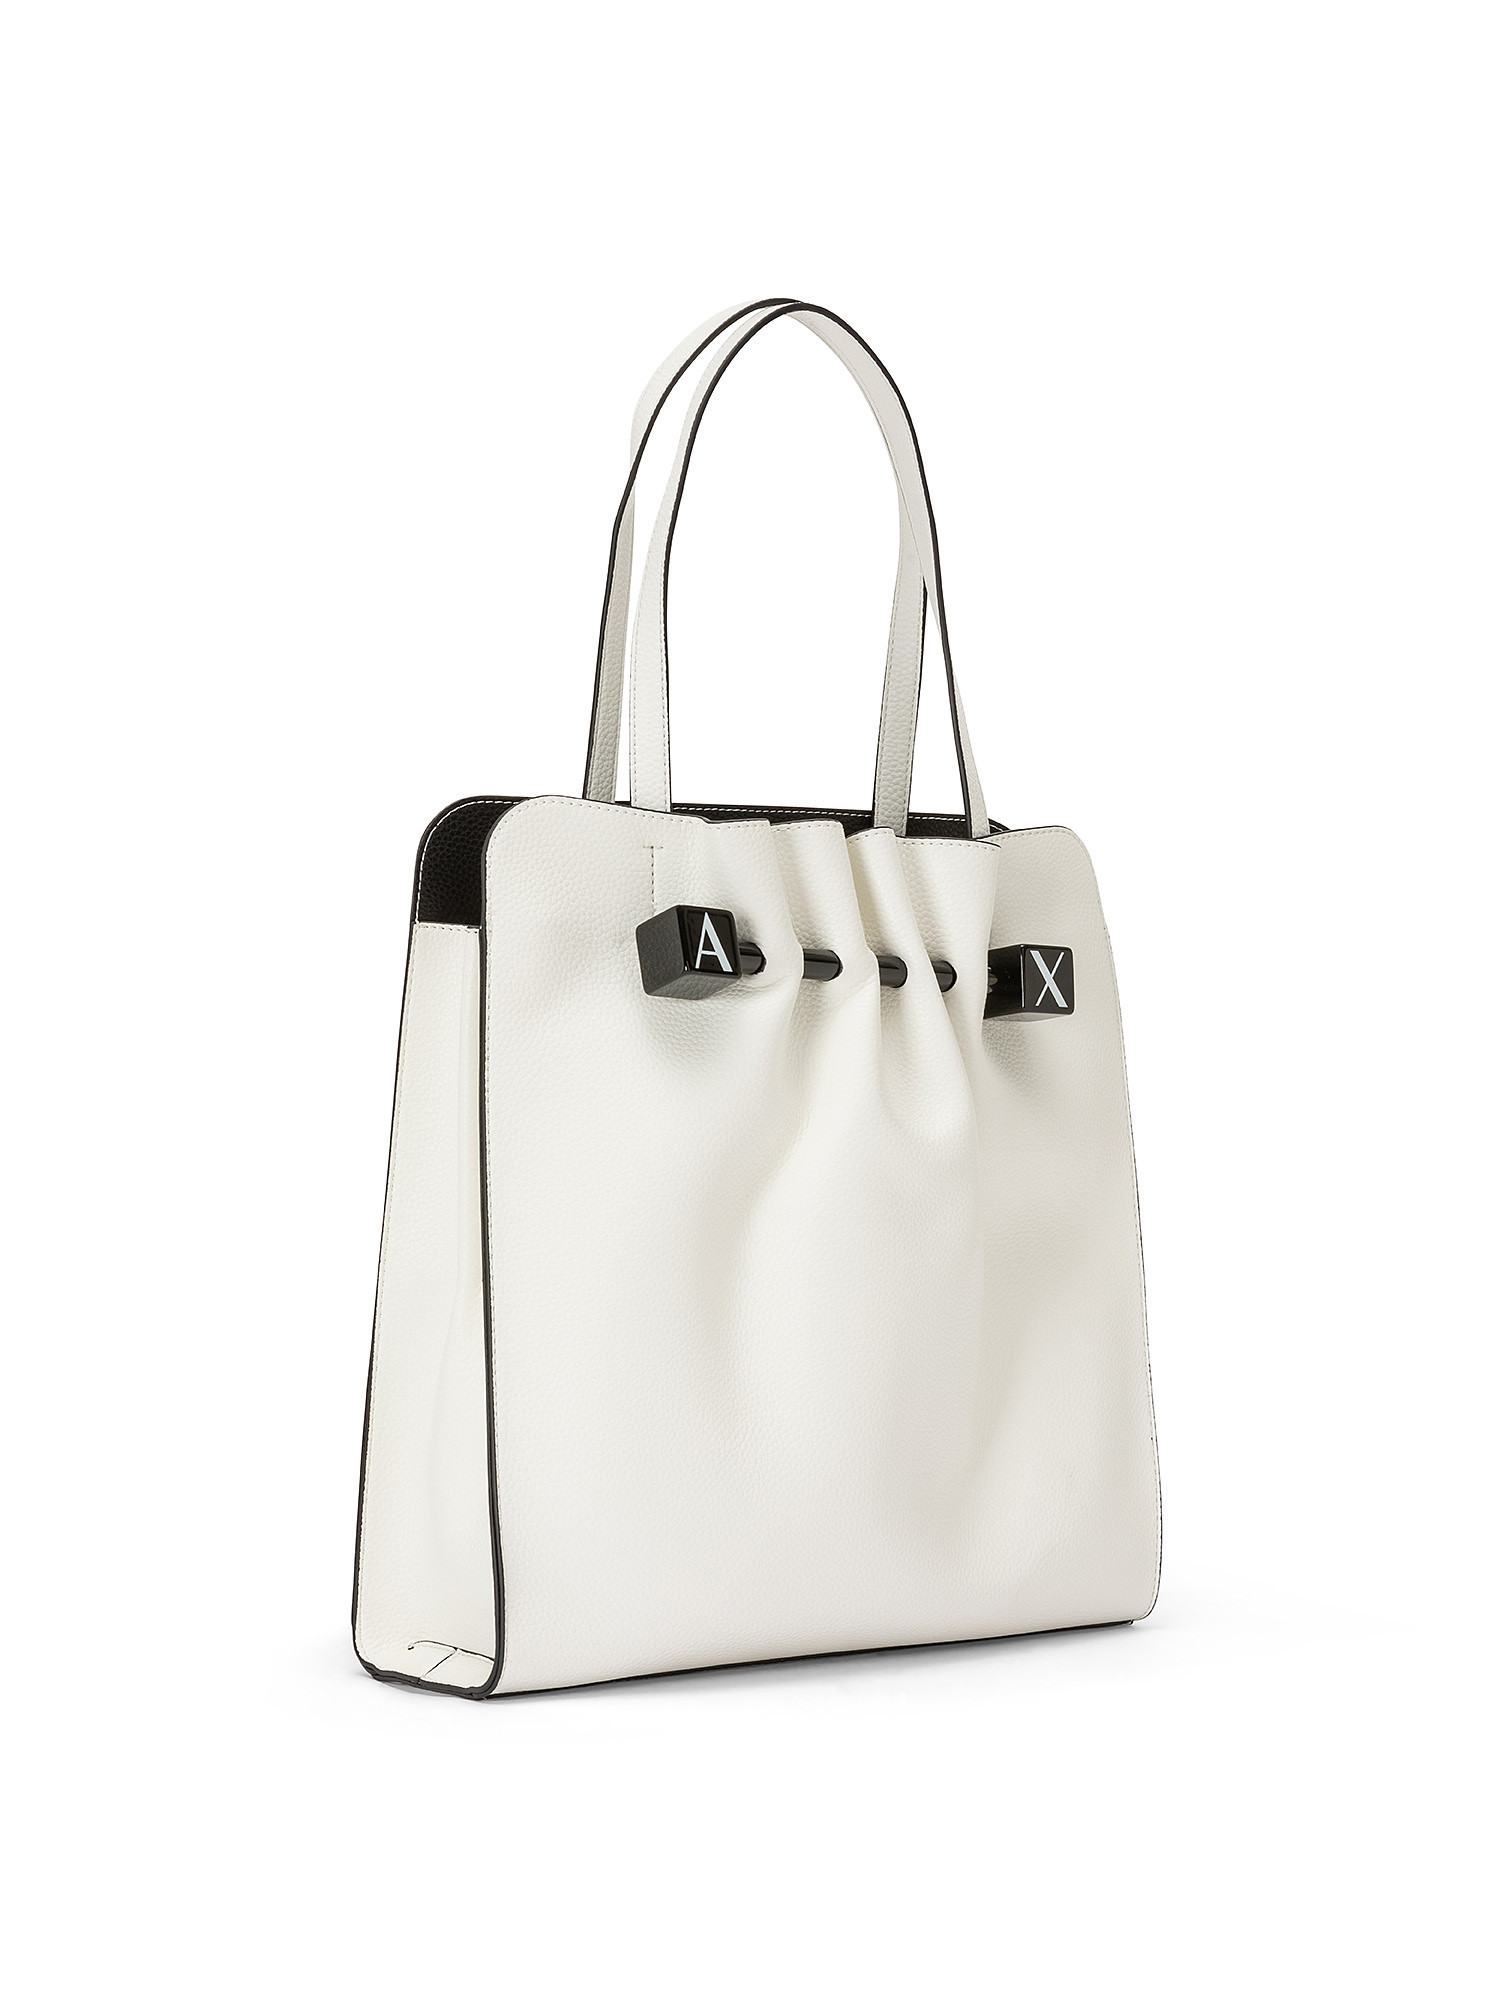 Shopping bag, Bianco, large